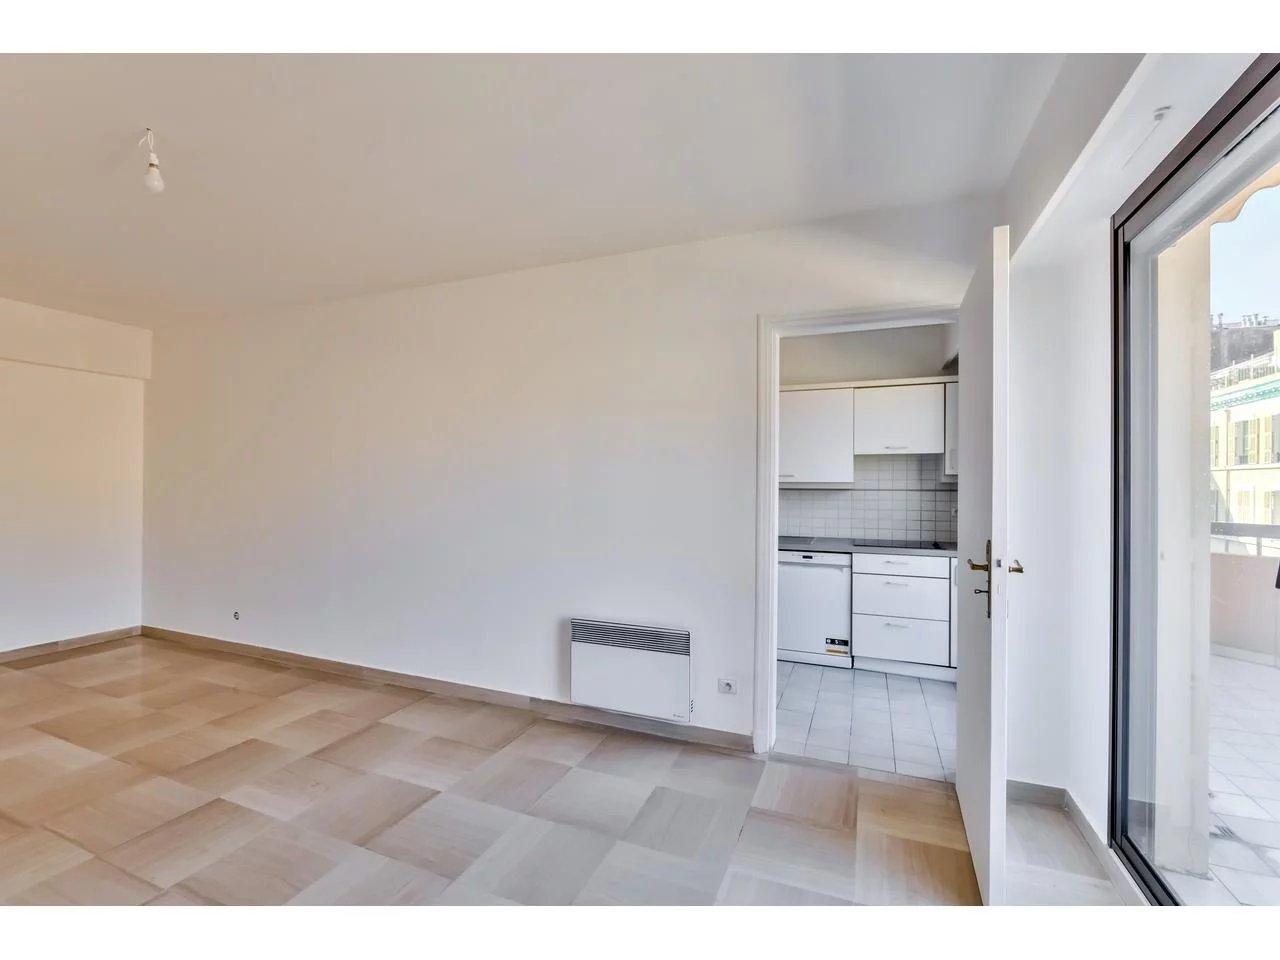 Appartement  4 Locali 89.68m2  In vendita   845 000 €